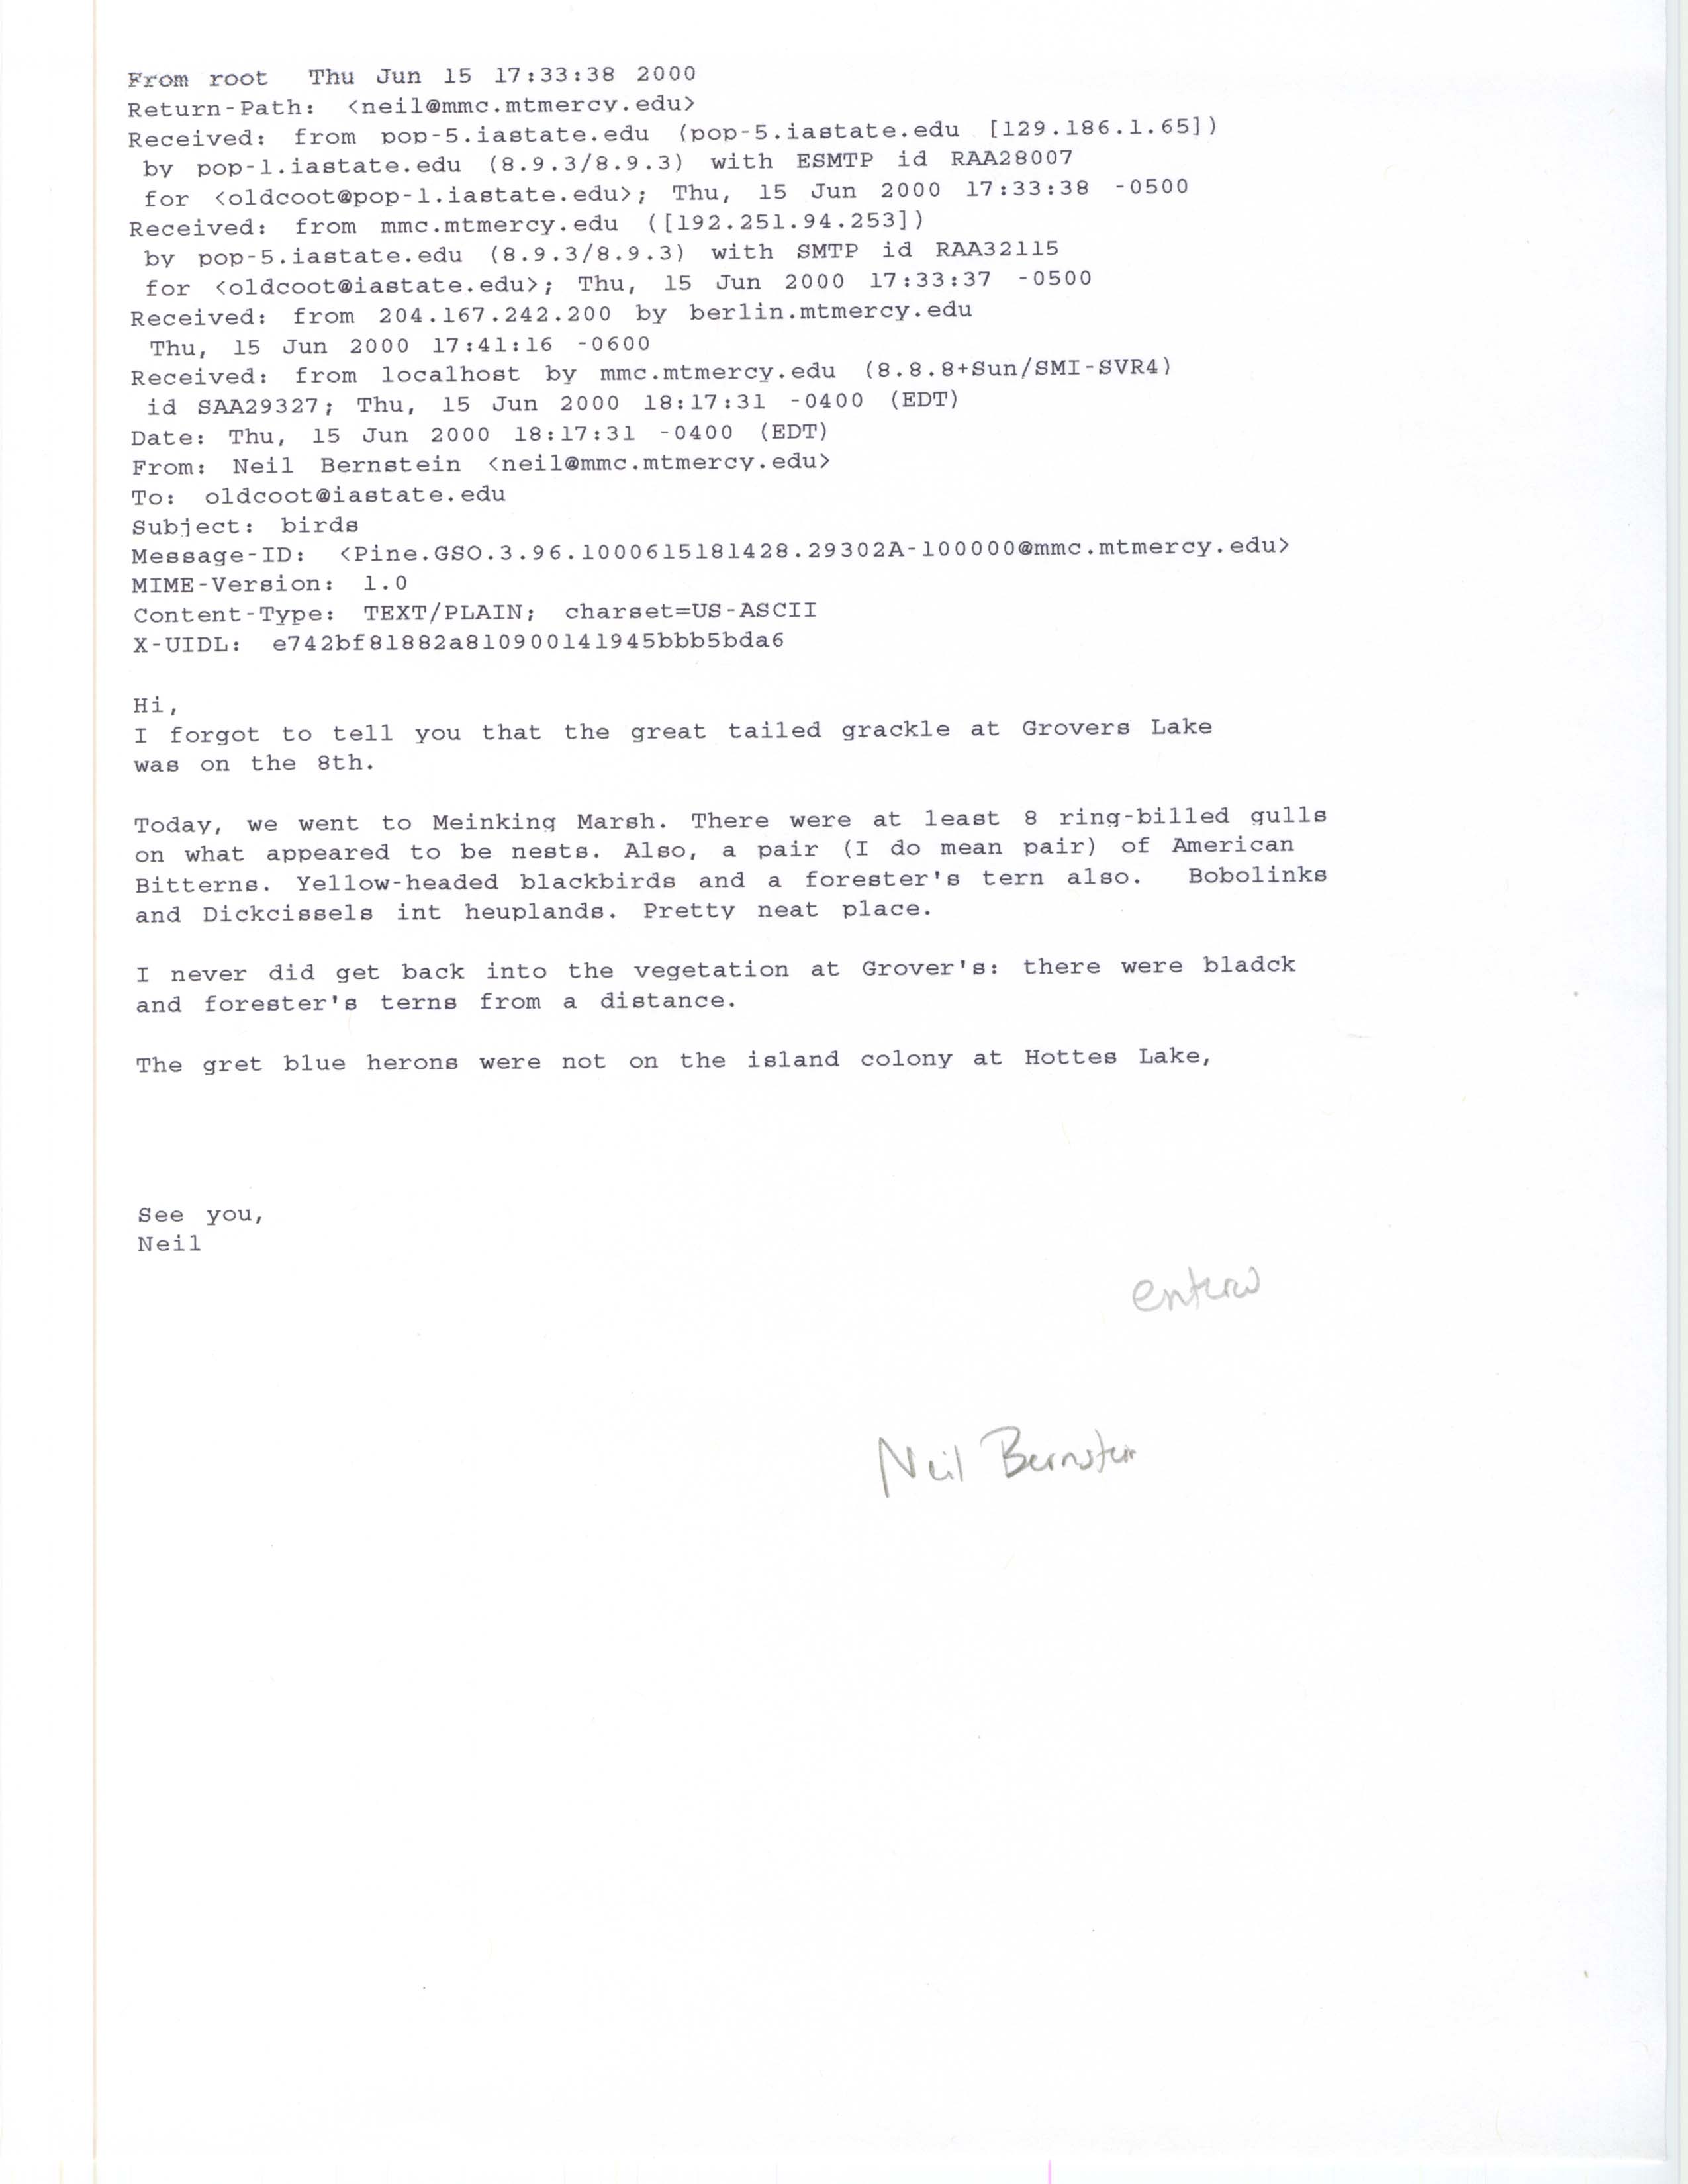 Neil Bernstein email to James J. Dinsmore regarding summer bird sightings, June 15, 2000